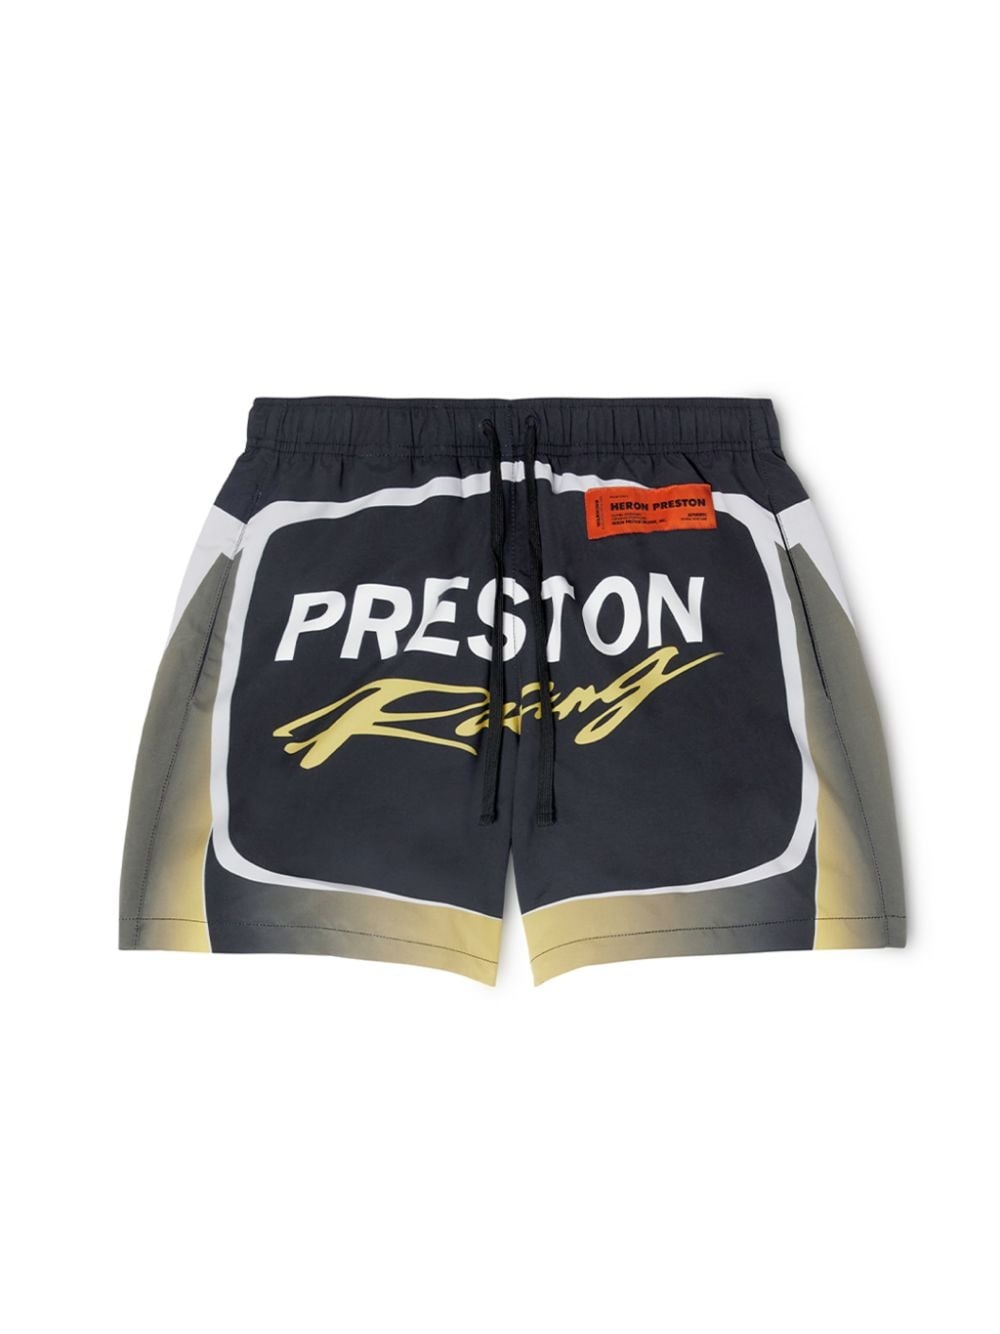 Preston Racing Dry Fit Shorts - 1